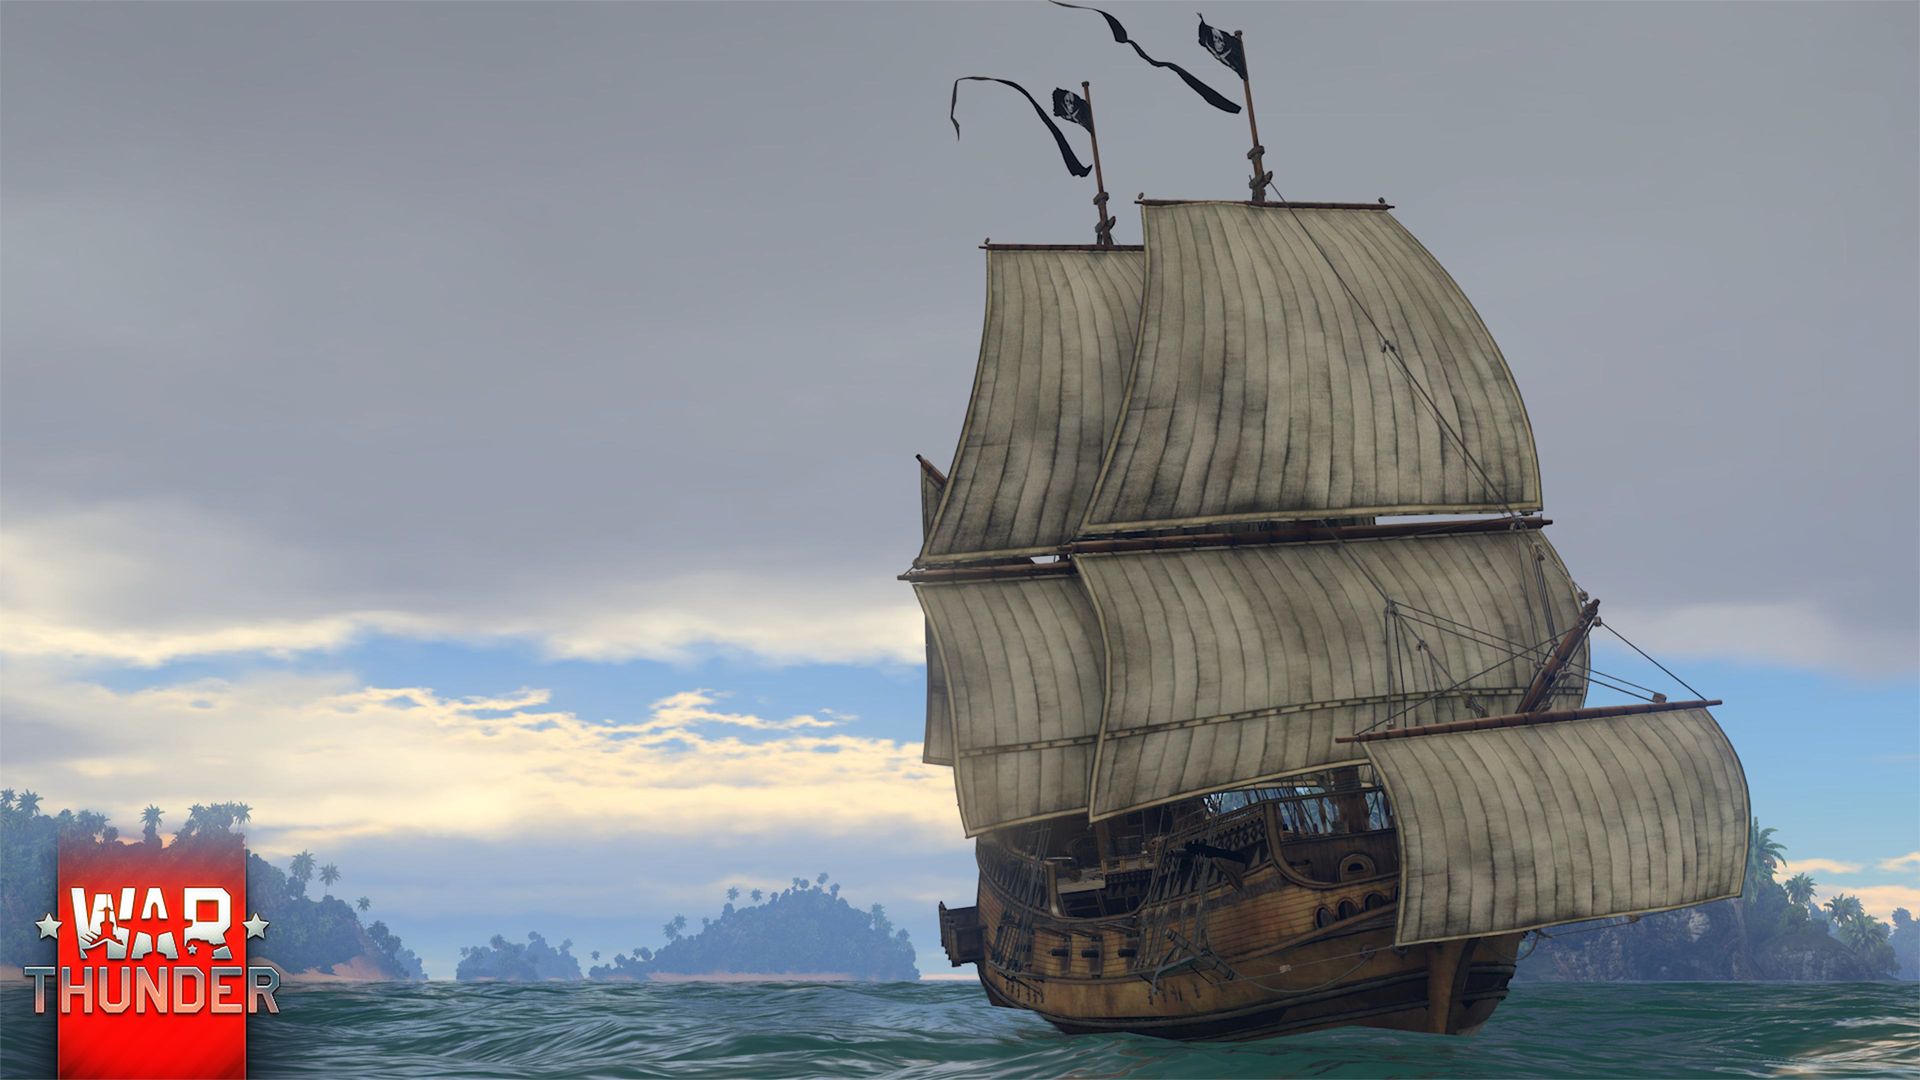 「War Thunder」，エイプリルフール企画で18世紀の帆船による海戦を実装「War Thunder」，エイプリルフール企画で18世紀の帆船による海戦を実装